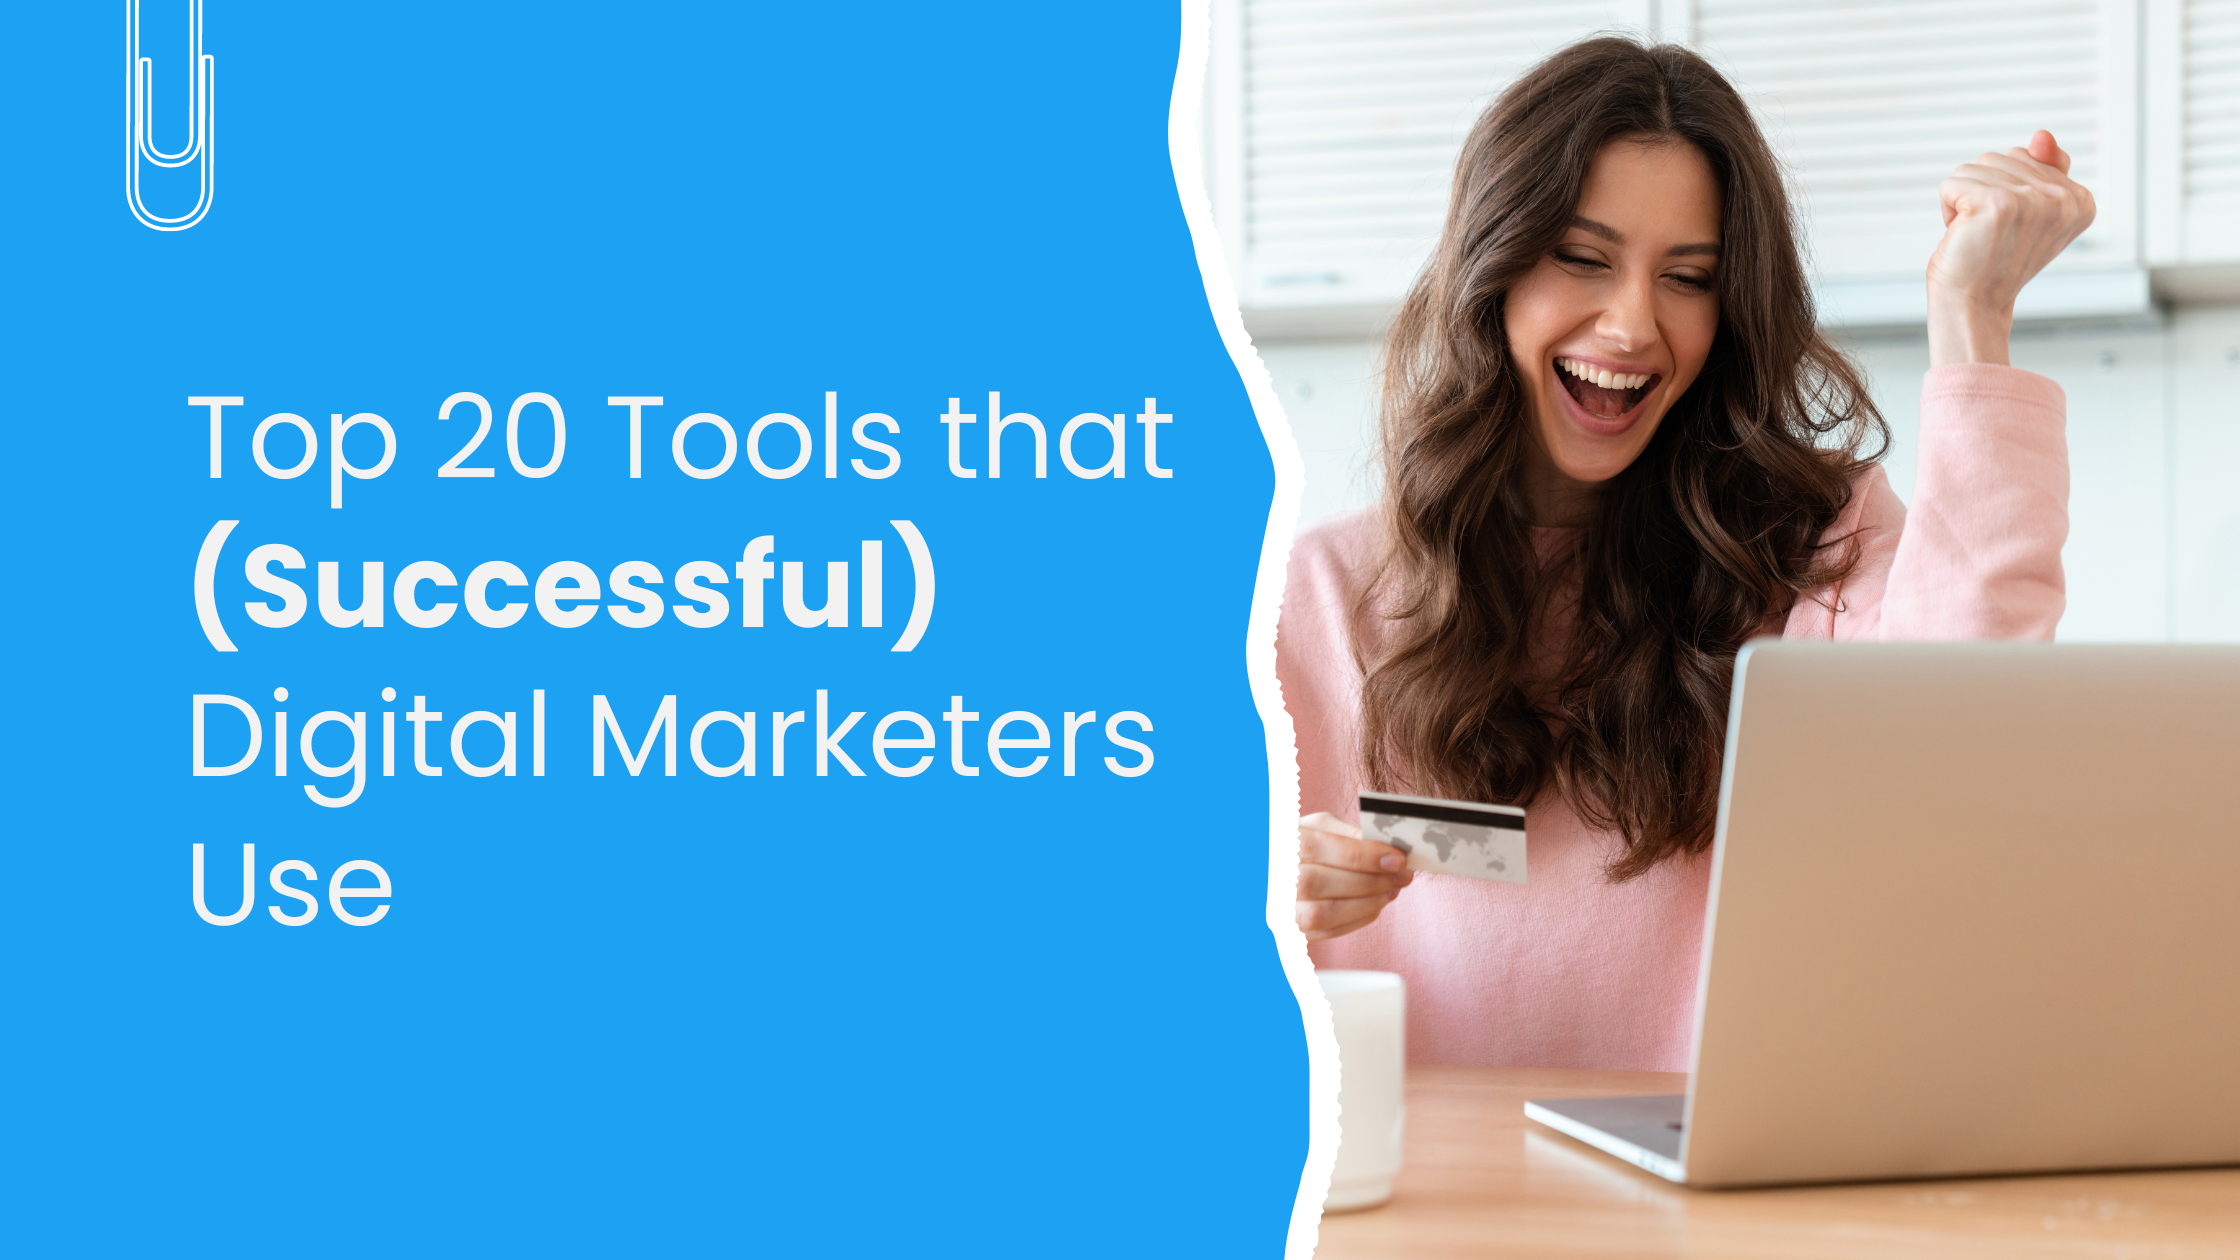 Top 10+ Digital Marketing Tools You Should Be Using